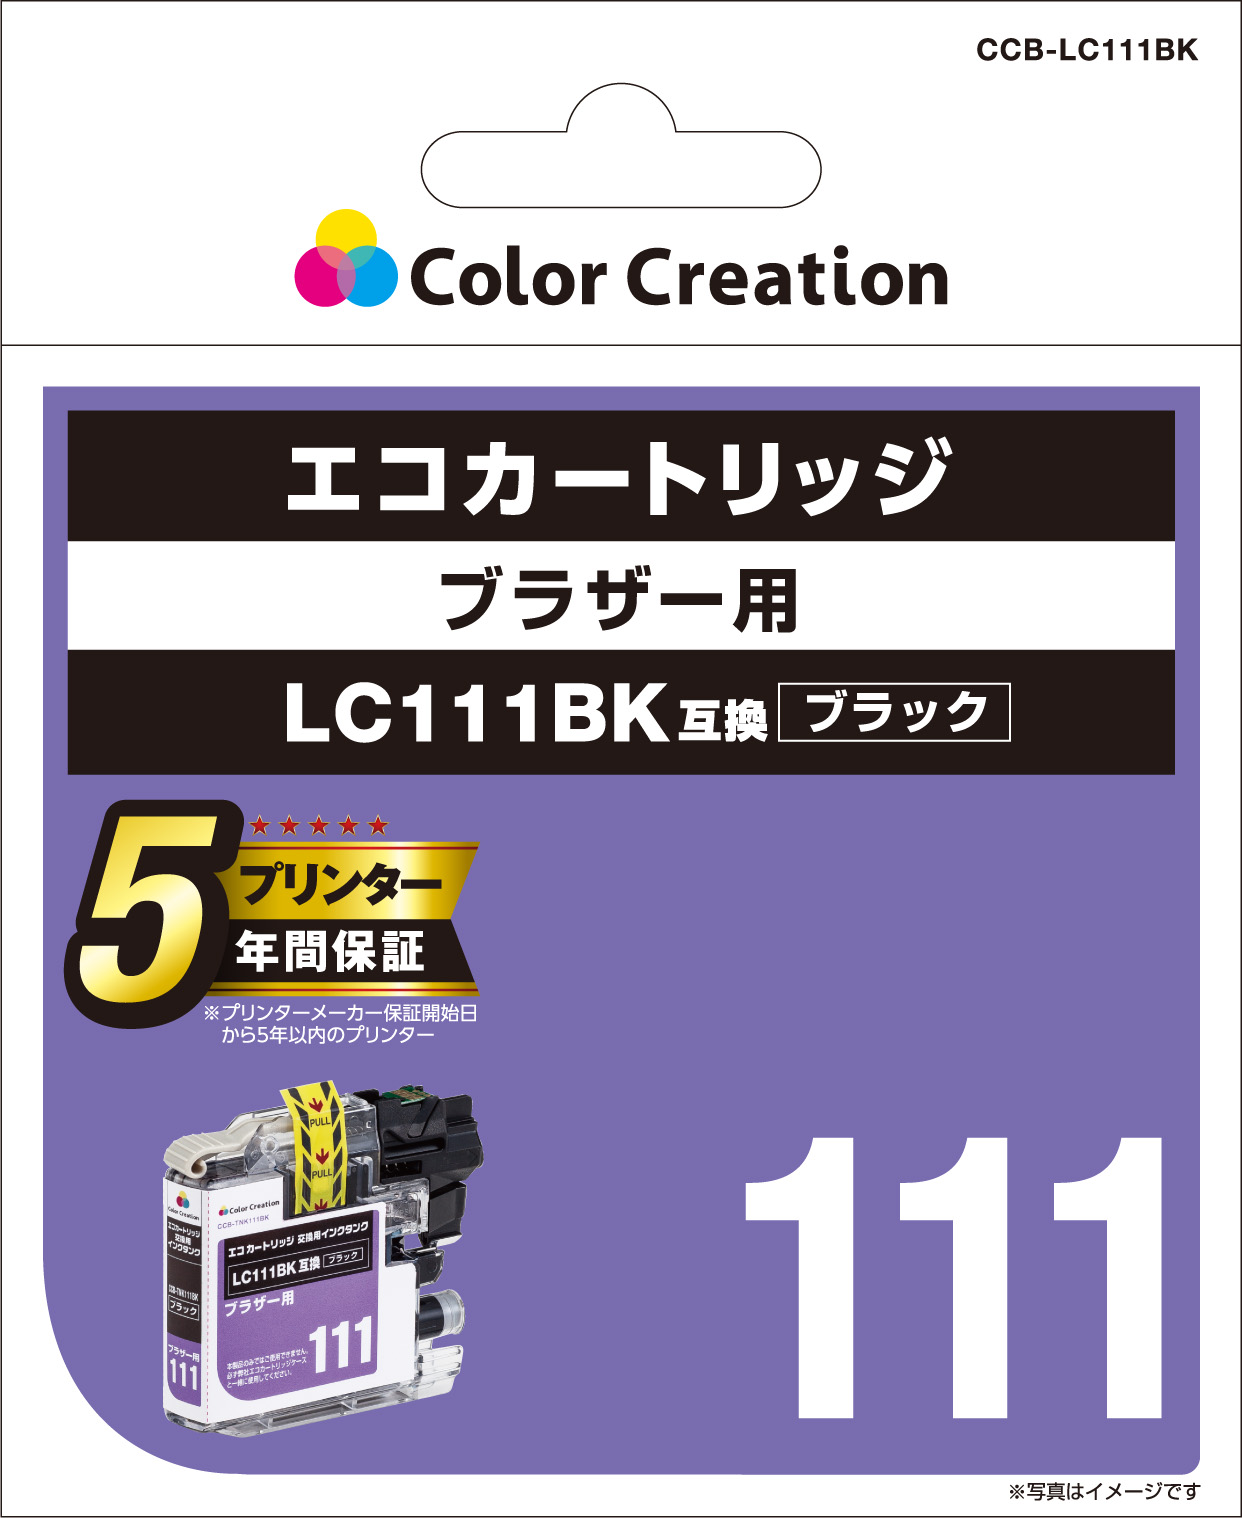 CCB-LC111BK